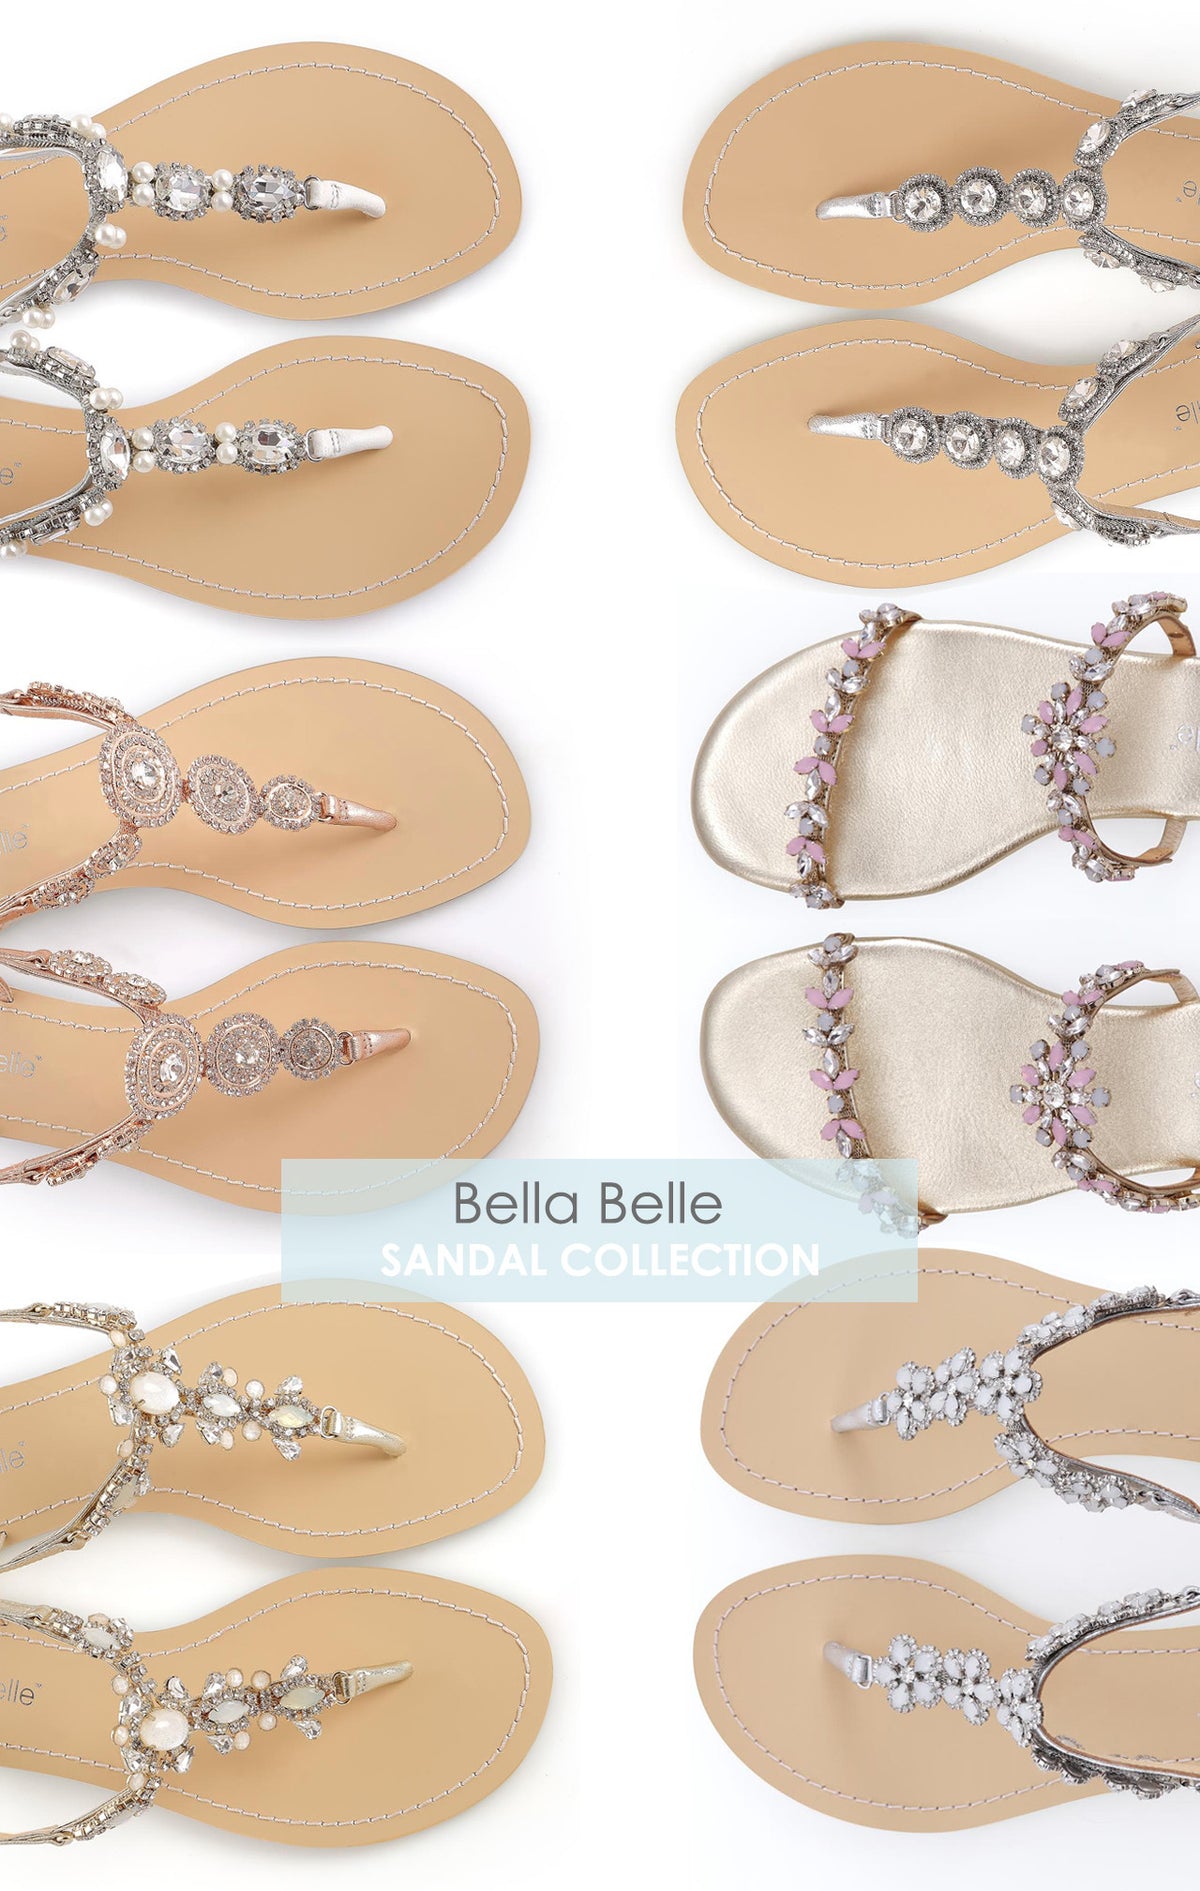 Bella Belle wedding sandals collection